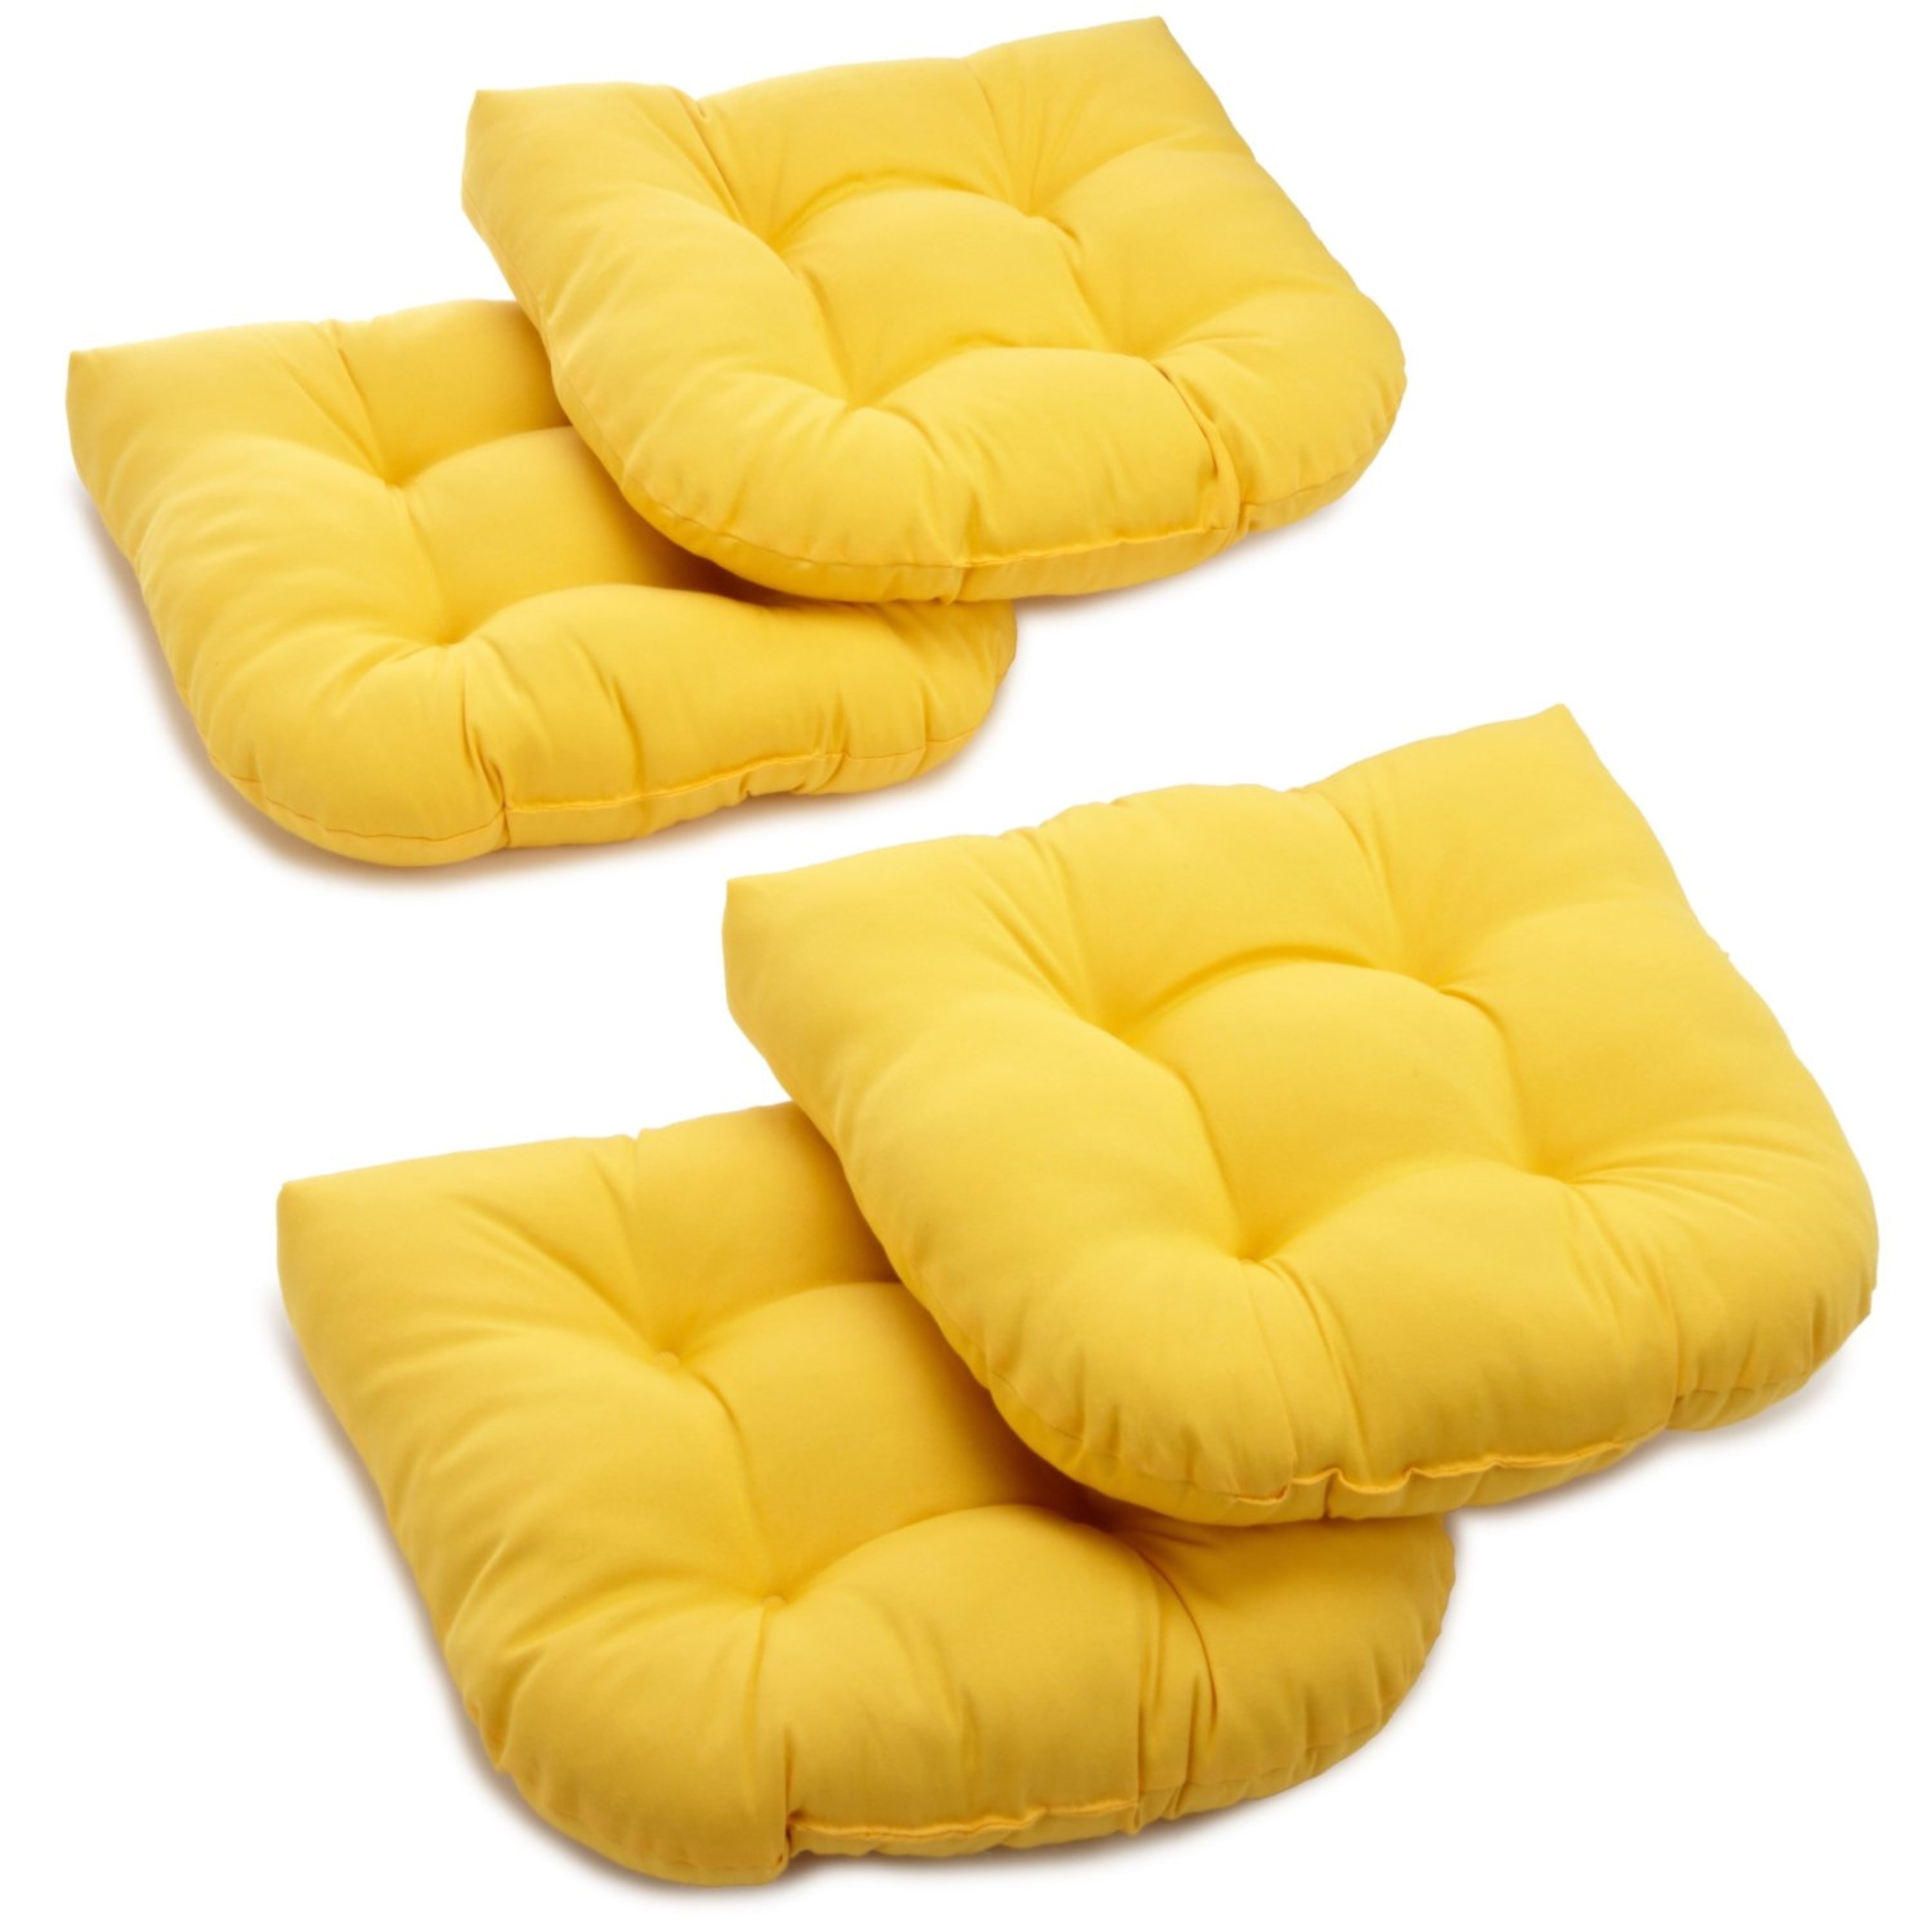 Wedge-shaped Seat Cushion Be Classic - Yellow Ochre –